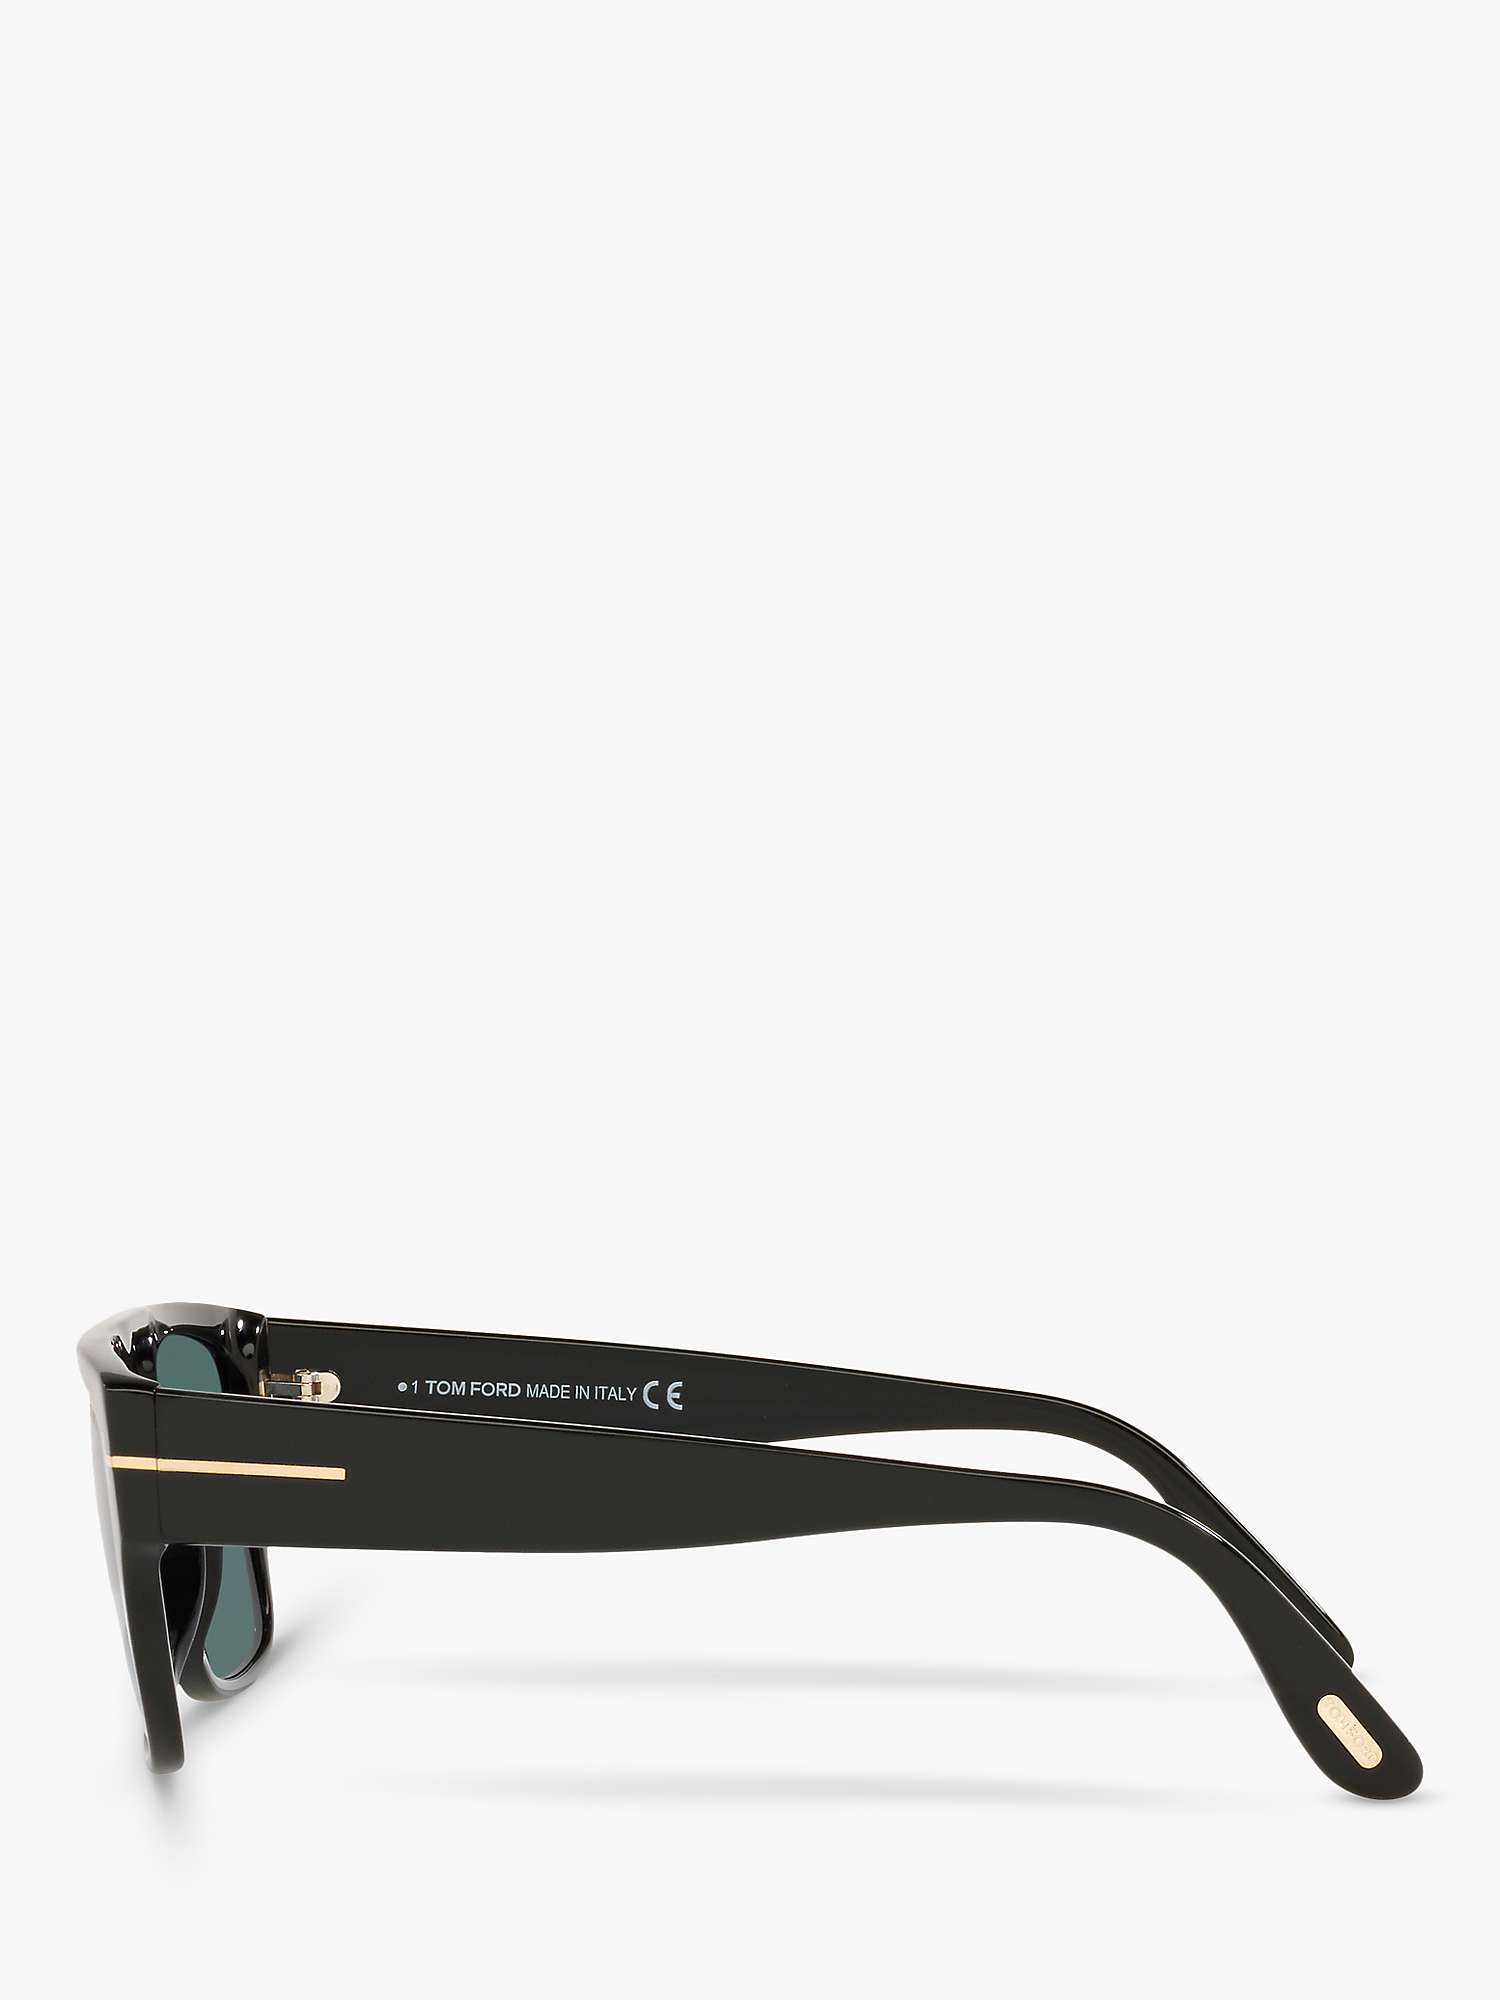 Buy TOM FORD TR001363 Men's Rectangular Sunglasses, Shiny Black/Blue Online at johnlewis.com